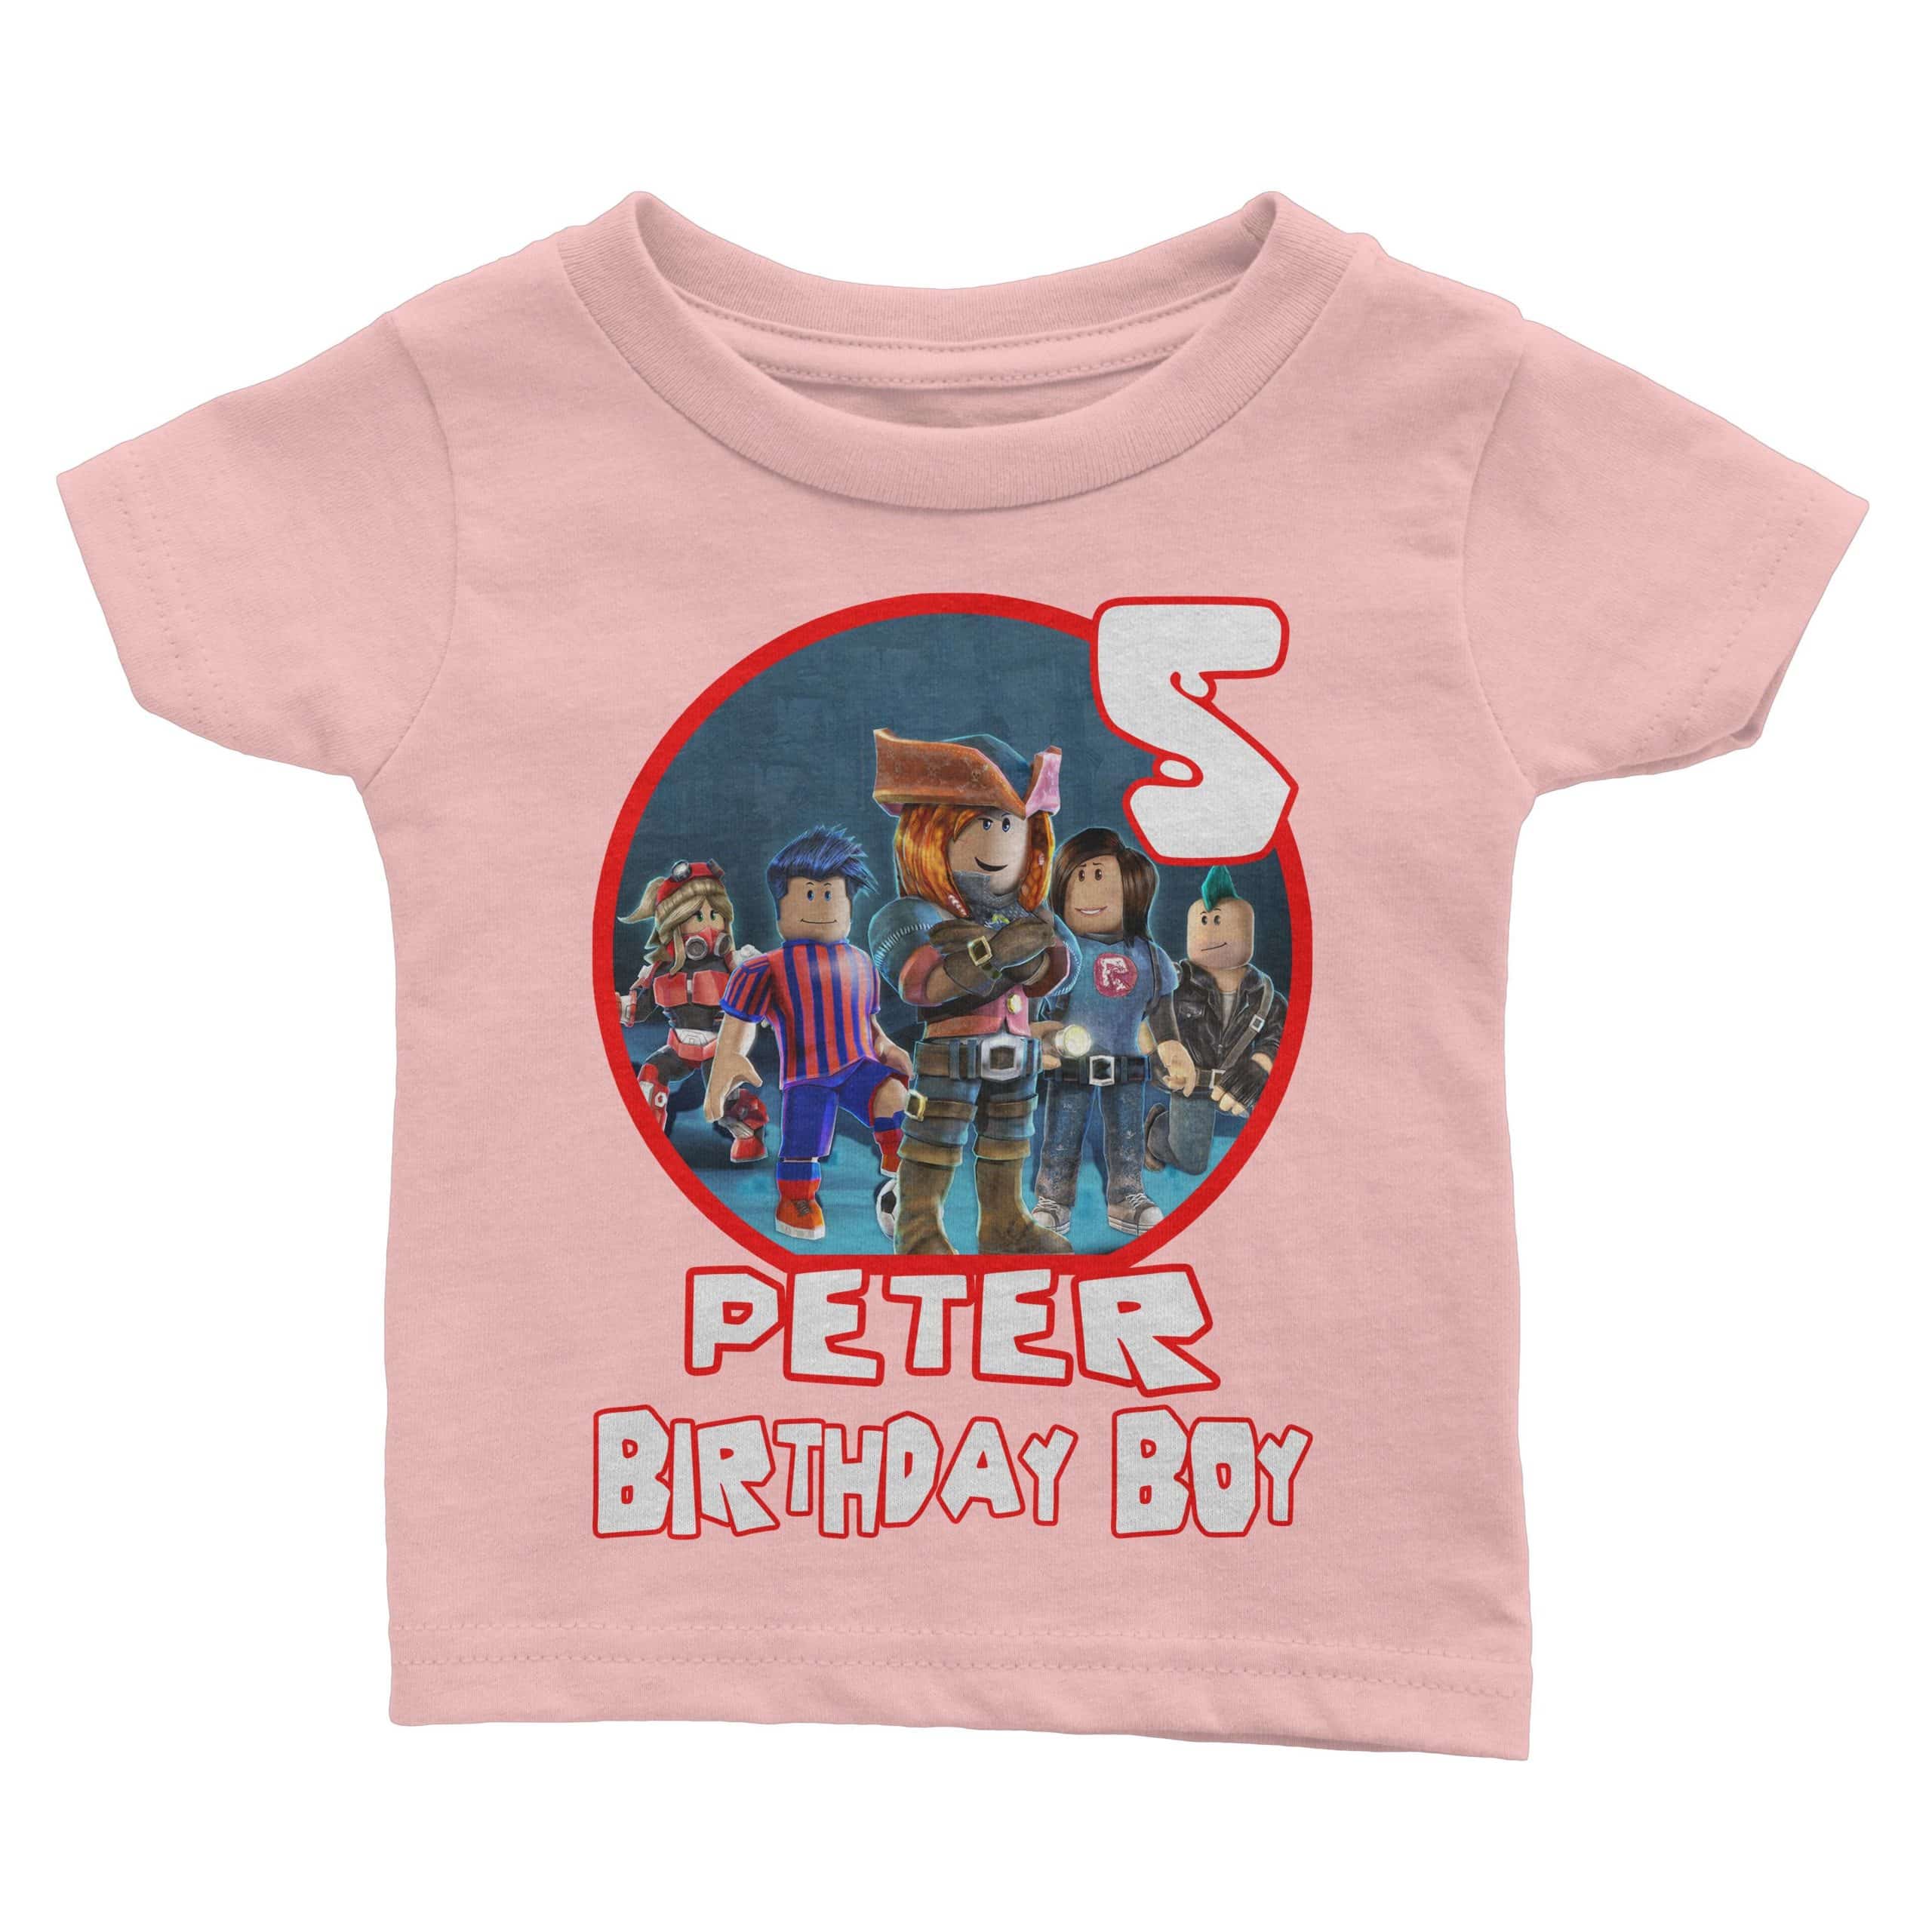 Roblox Birthday Tee Shirt for Boy